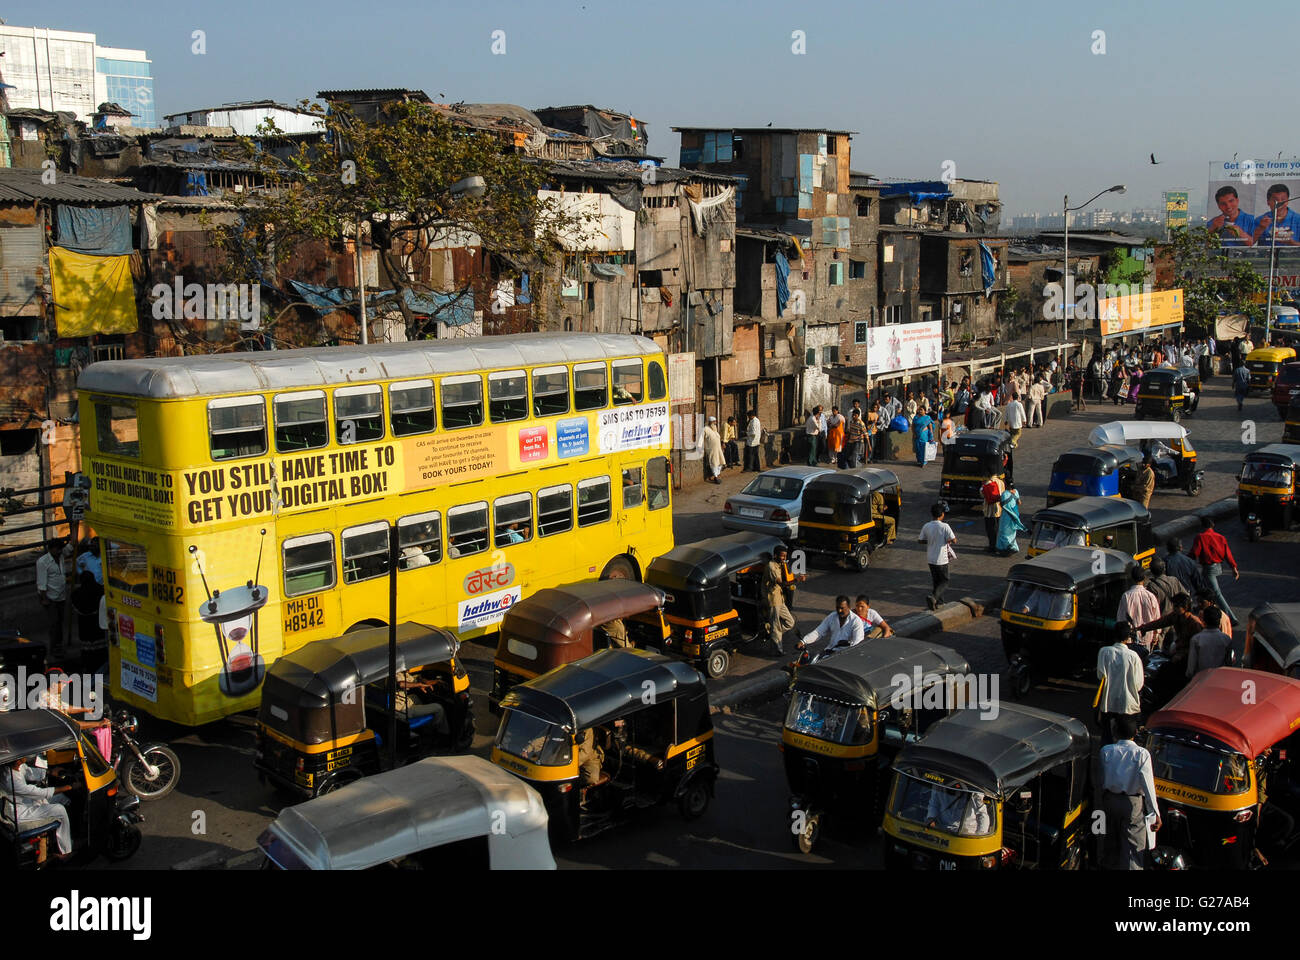 INDIA Mumbai Bombay commuter alla stazione di Bandra, dietro la baraccopoli di capanne / INDIEN Bombay Mumbai das Wirtschaftszentrum und Finanzzentrum Indiens, Pendler am S-Bahnhof Bandra, Hintergrund Huetten eines baraccopoli Foto Stock